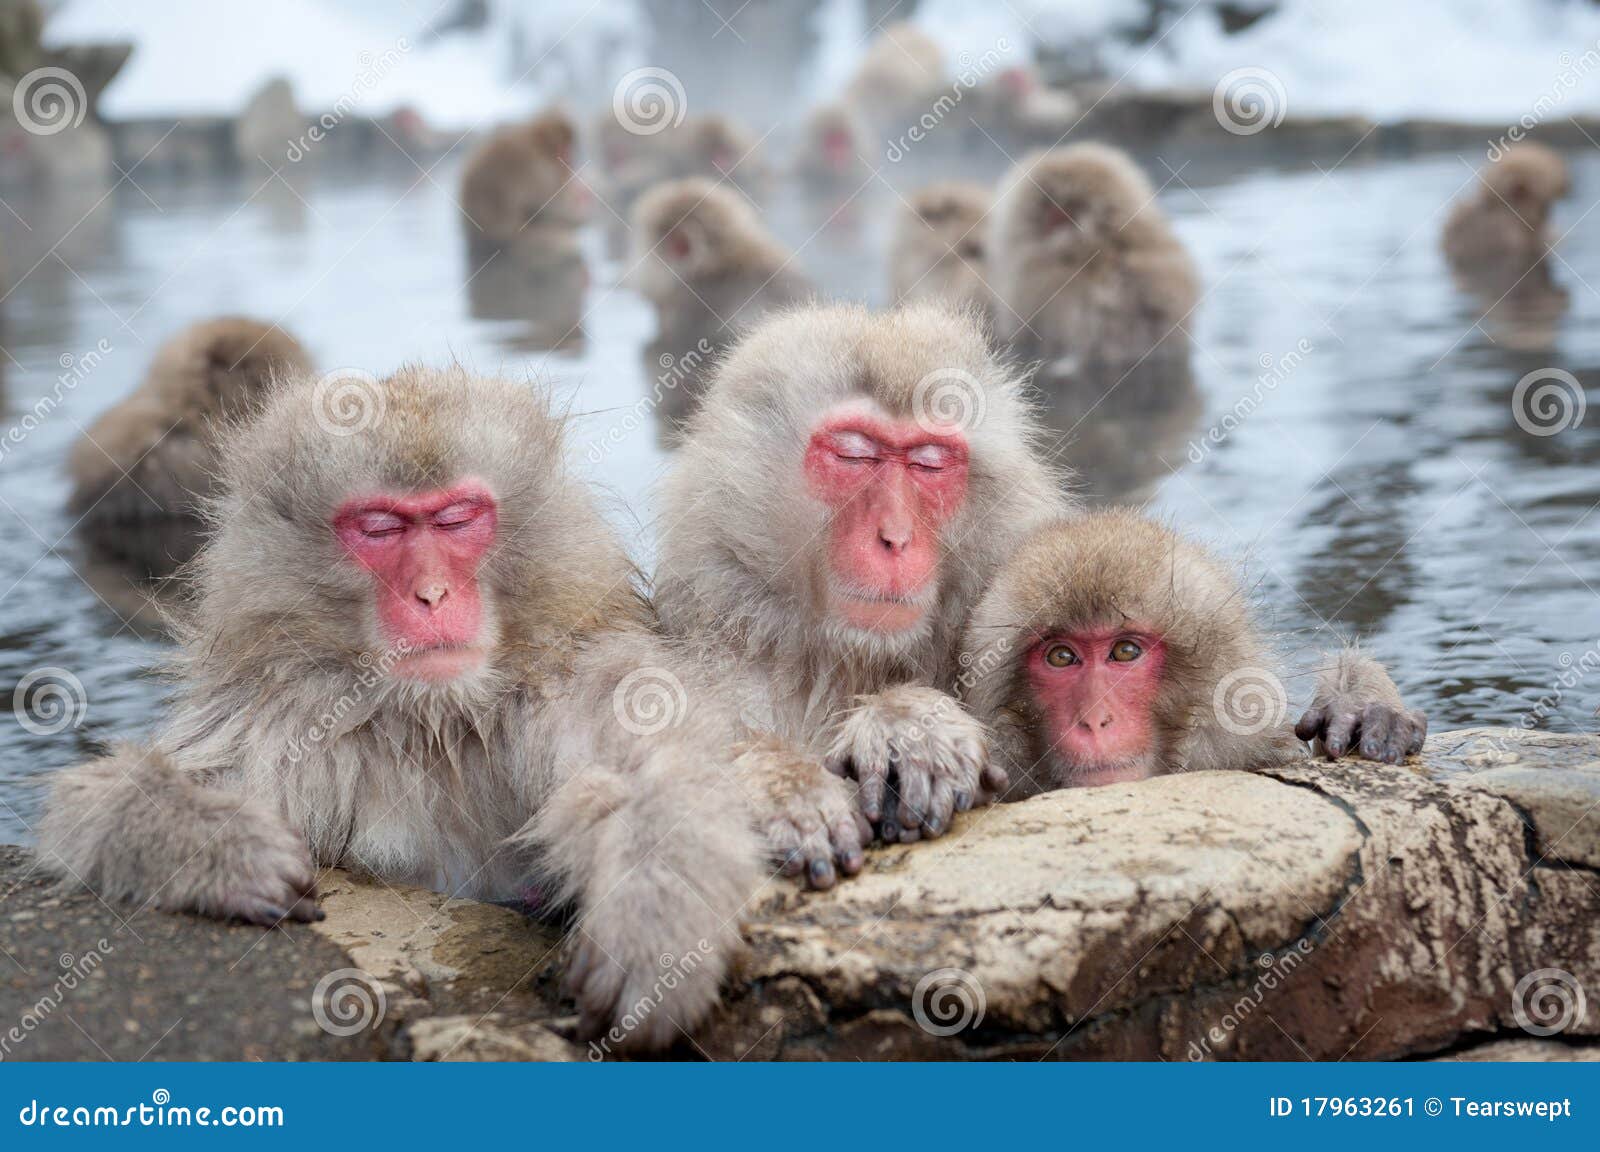 snow monkeys in onsen